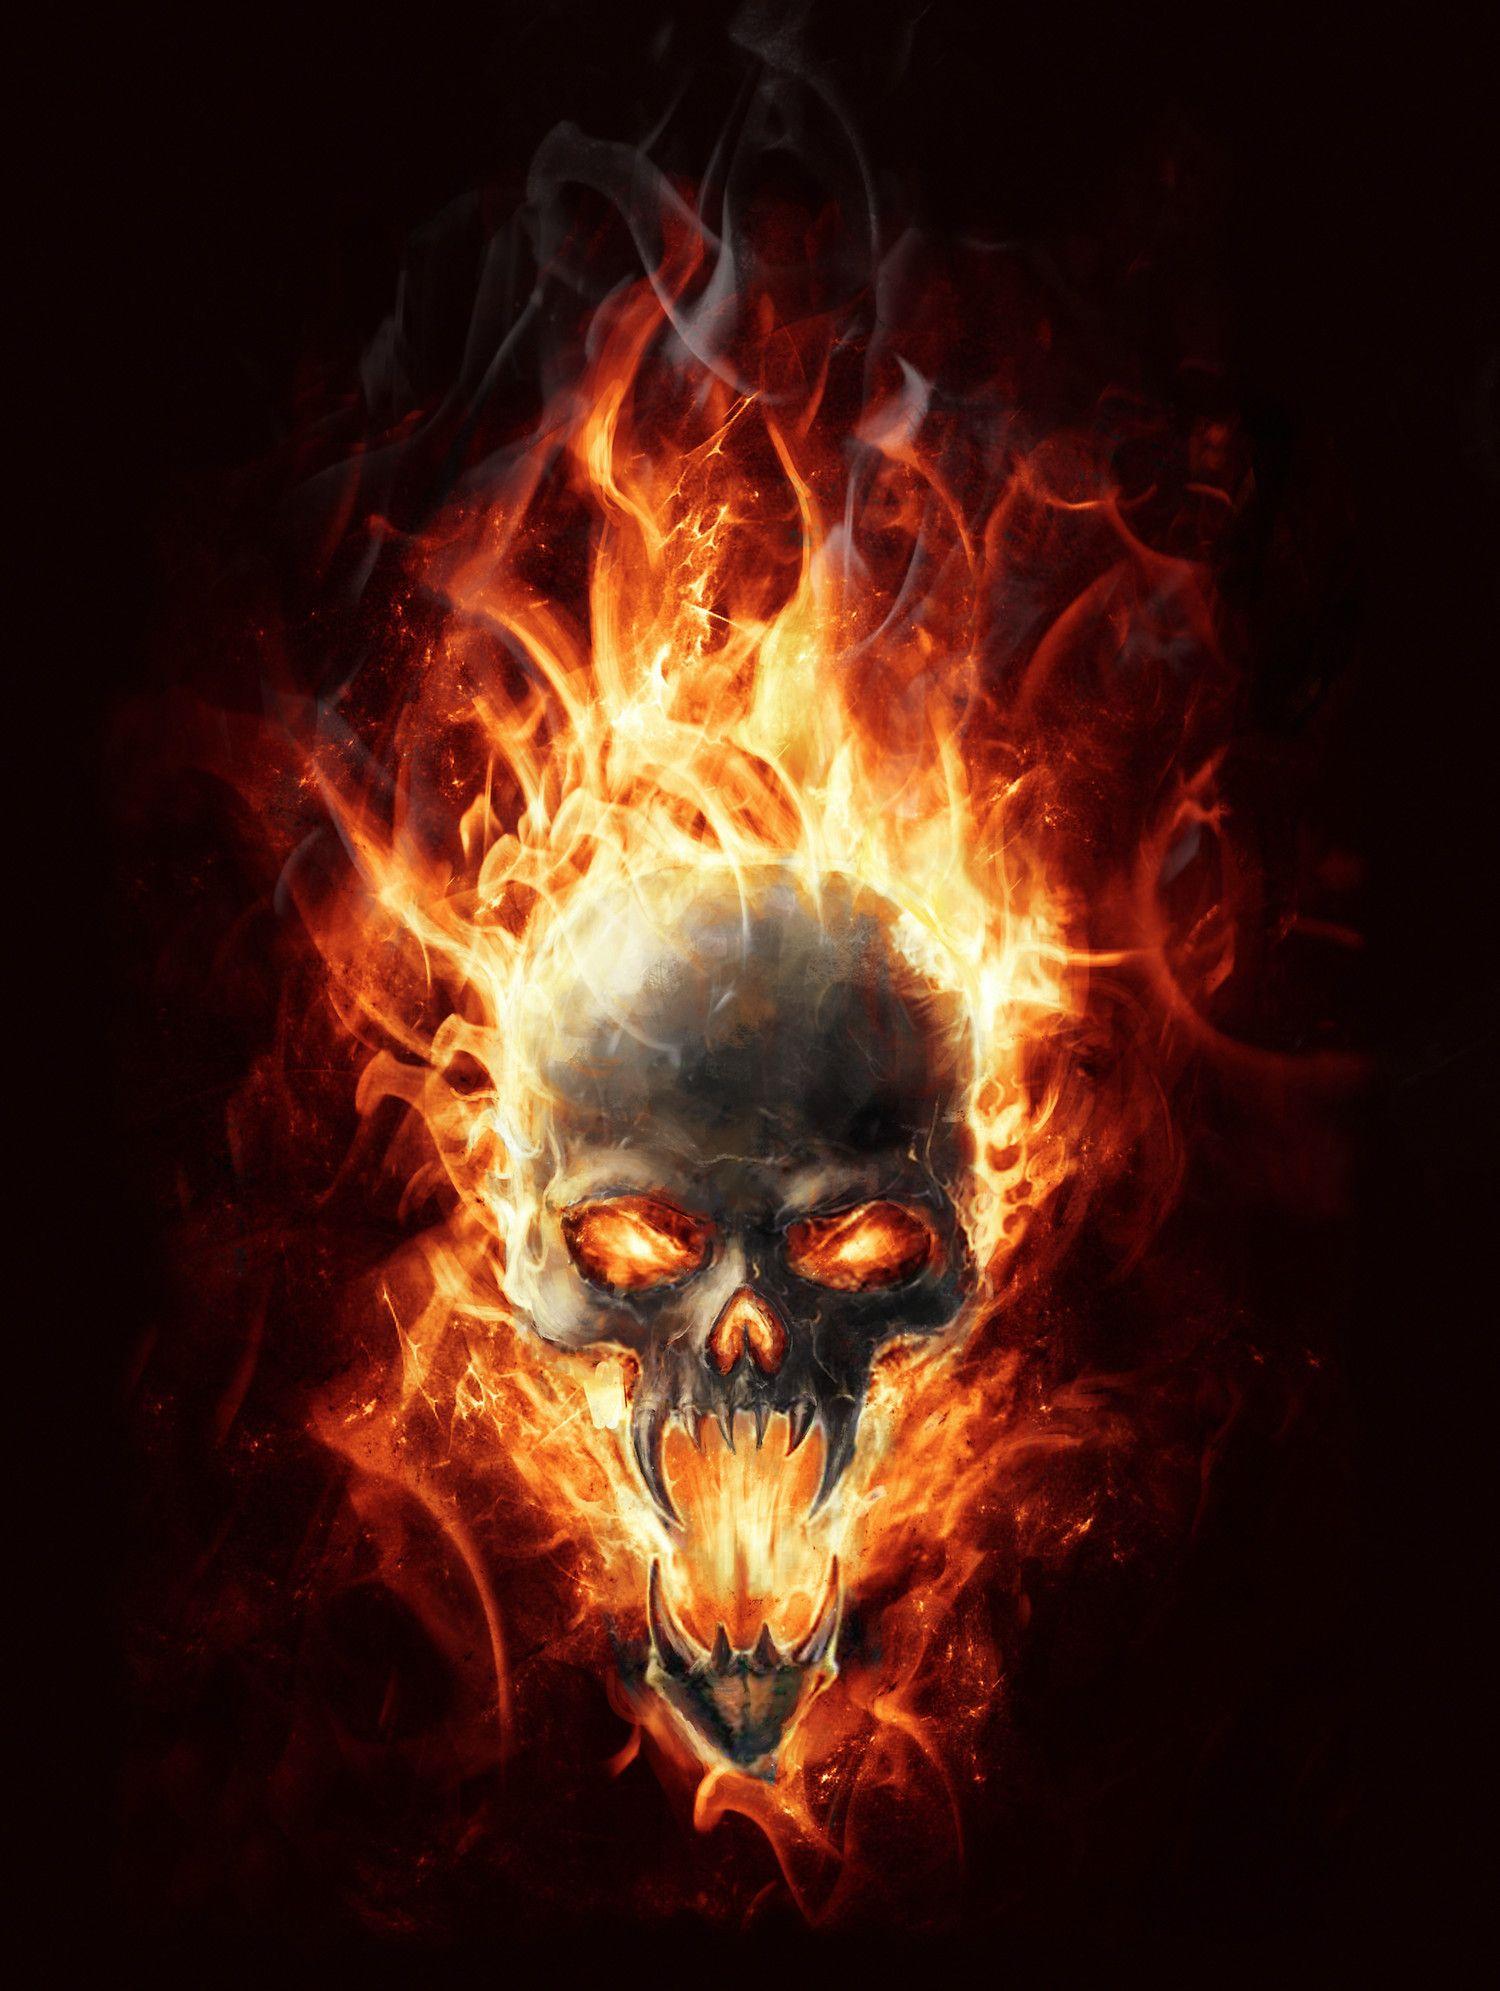 1169 3d Flaming Skull Images Stock Photos  Vectors  Shutterstock